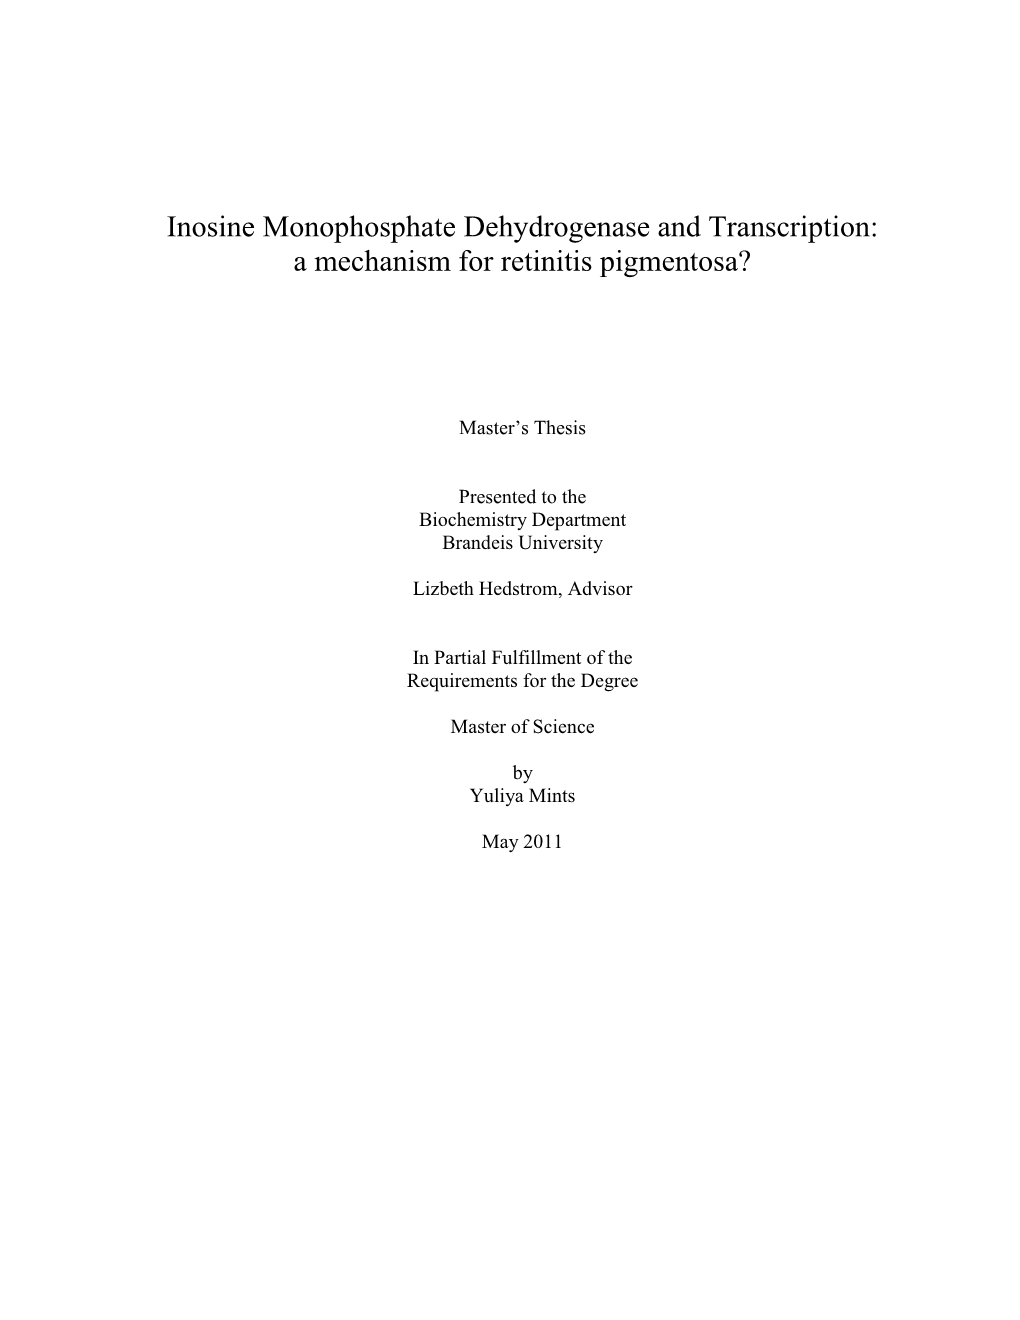 Inosine Monophosphate Dehydrogenase and Transcription: a Mechanism for Retinitis Pigmentosa?